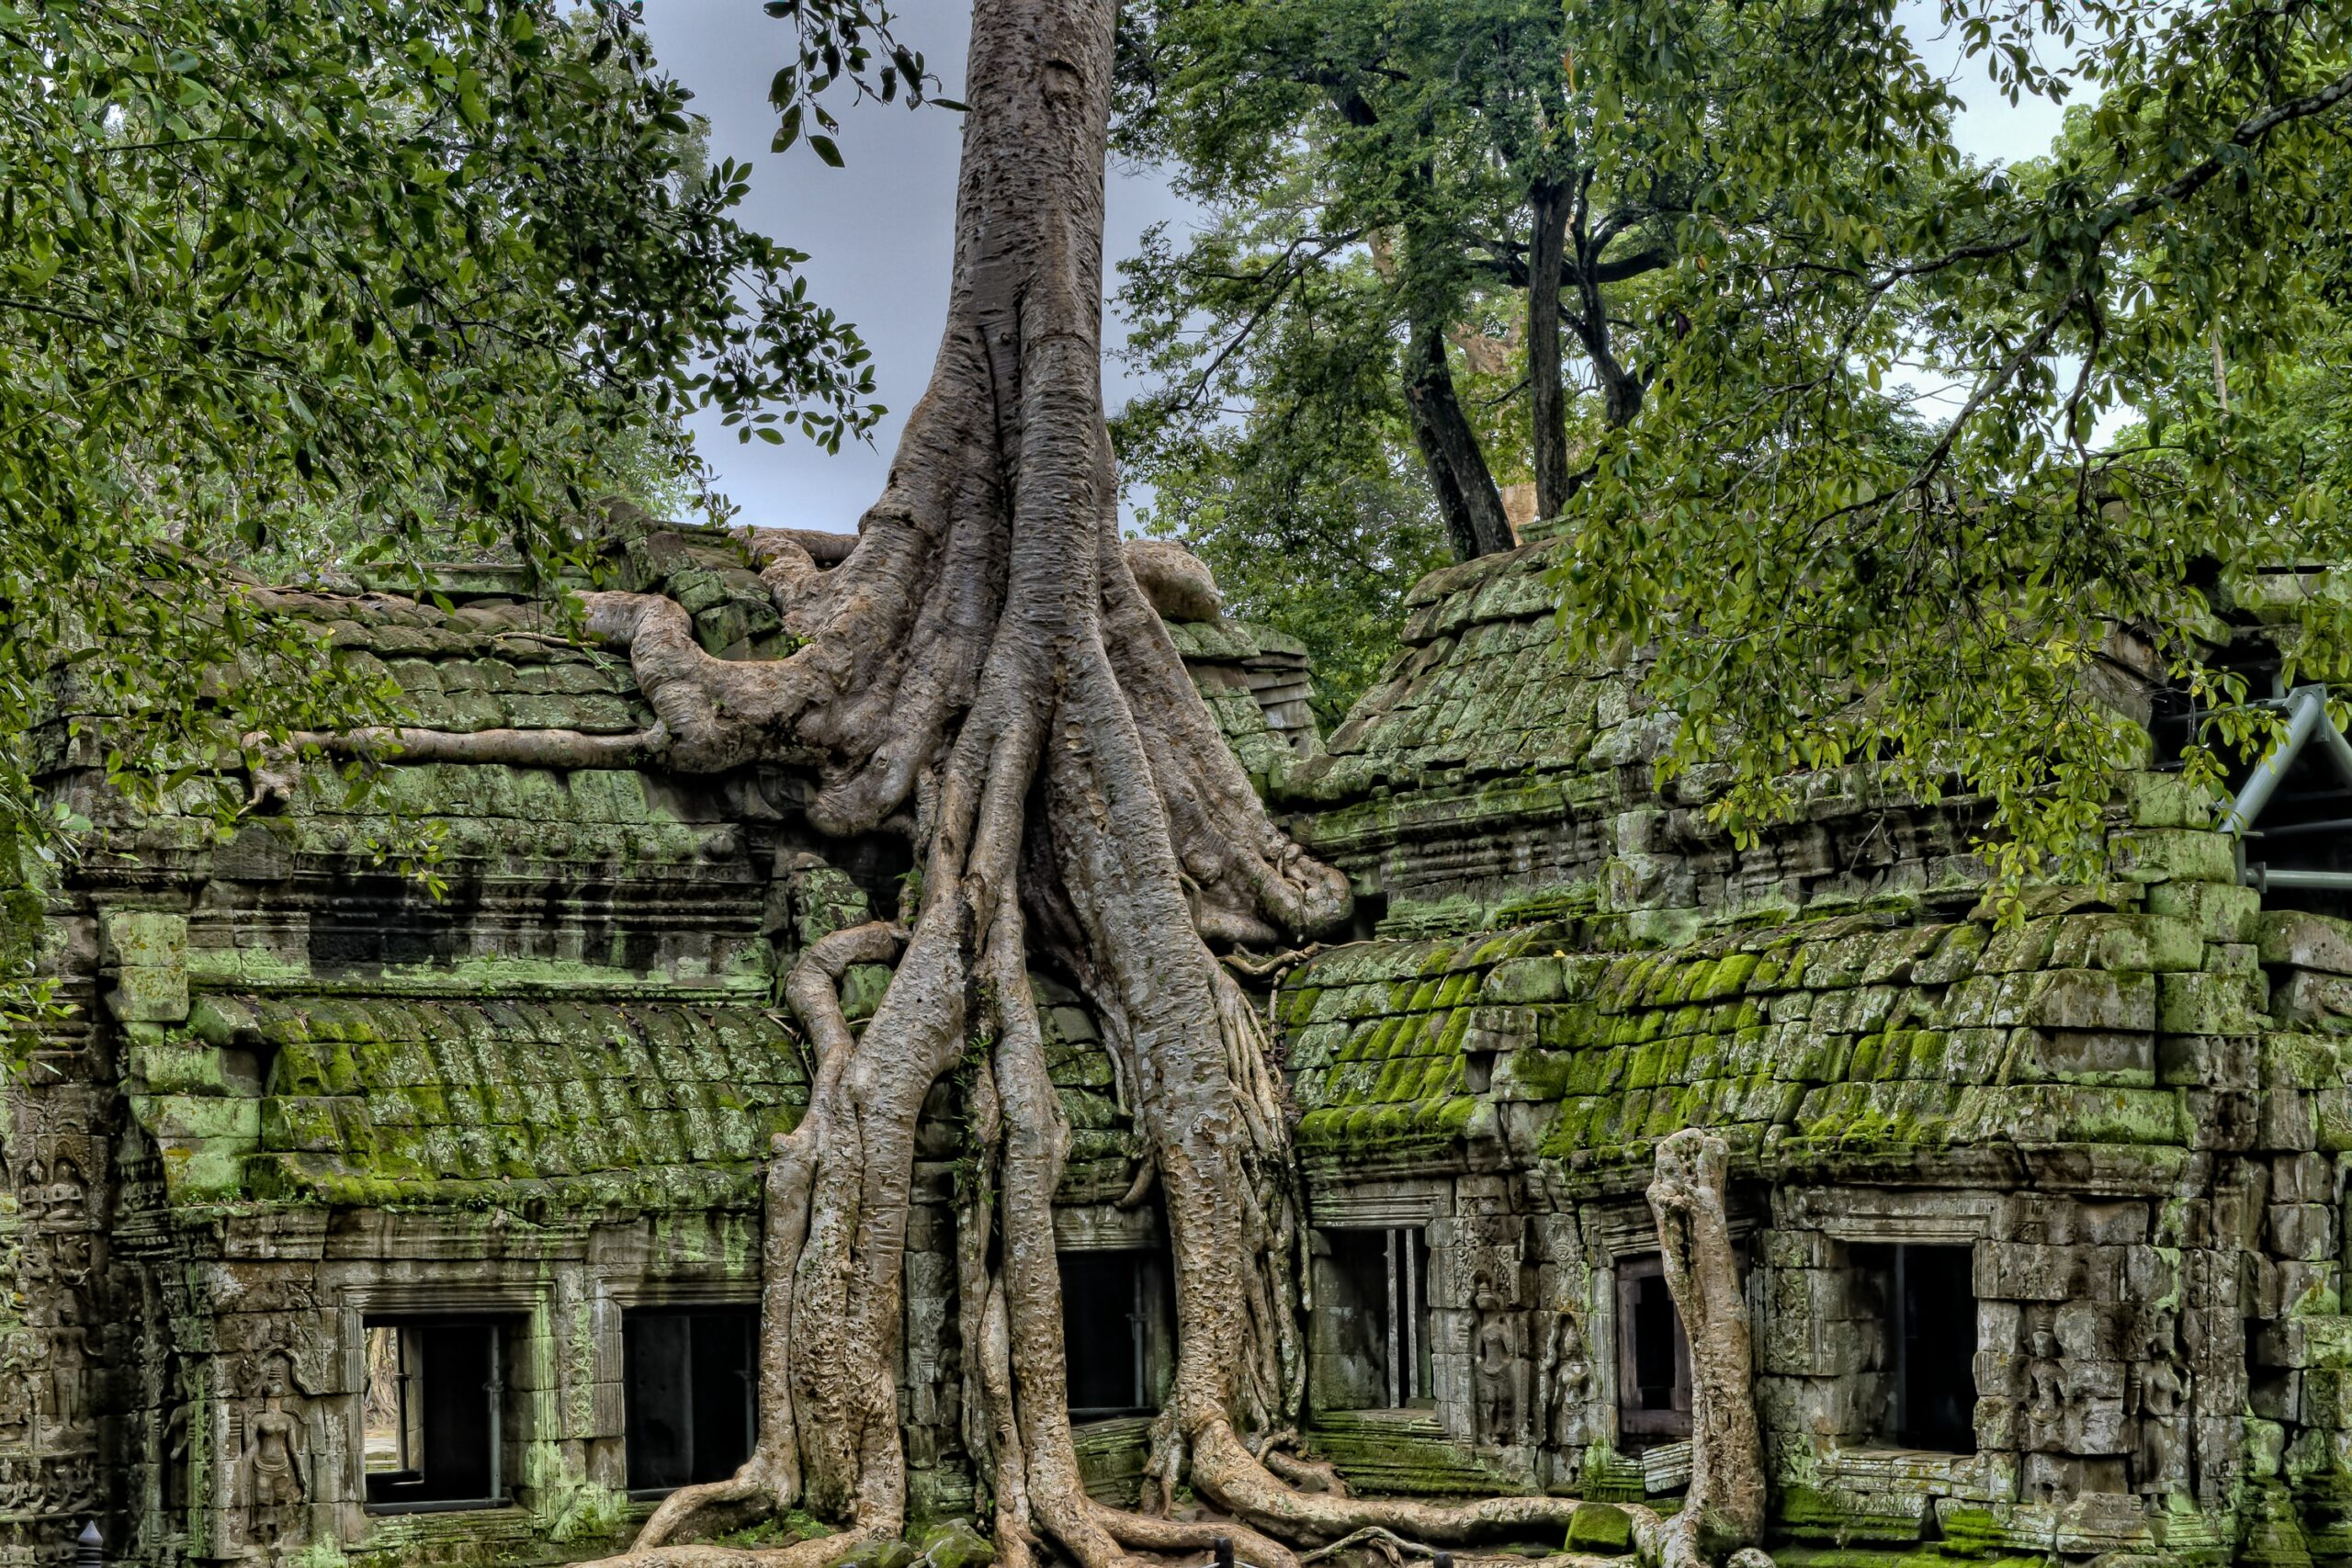 Angkor trees on a a ruin